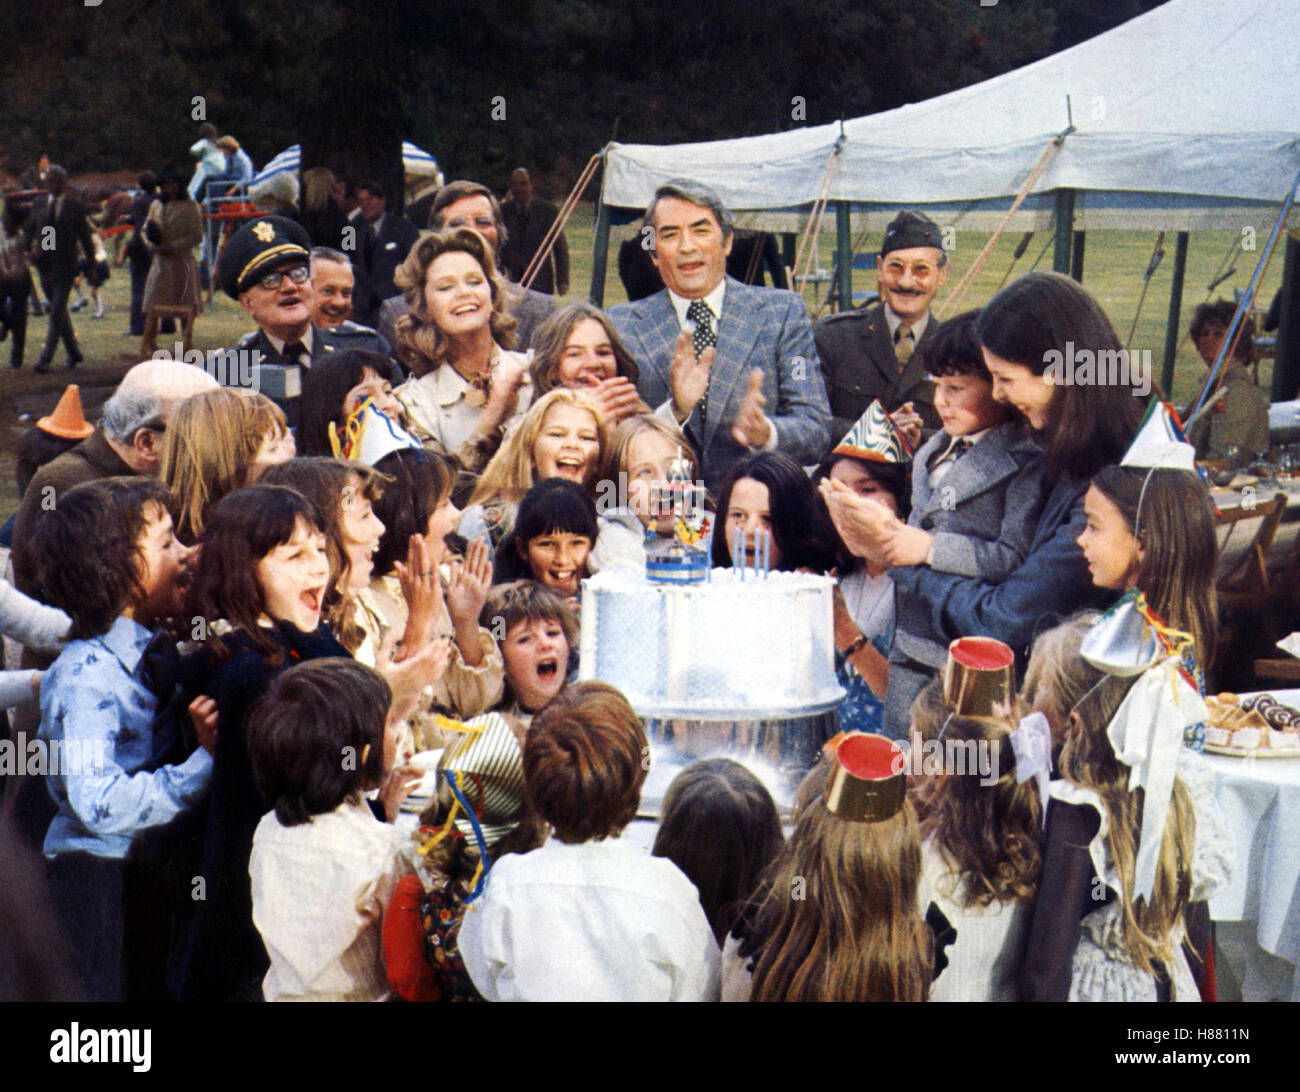 Das Omen, (THE OMEN) USA 1975, Regie: Richard Donner, LEE REMICK, GREGORY PECK, HARVEY STEVENS, Stichwort: Party Stock Photo